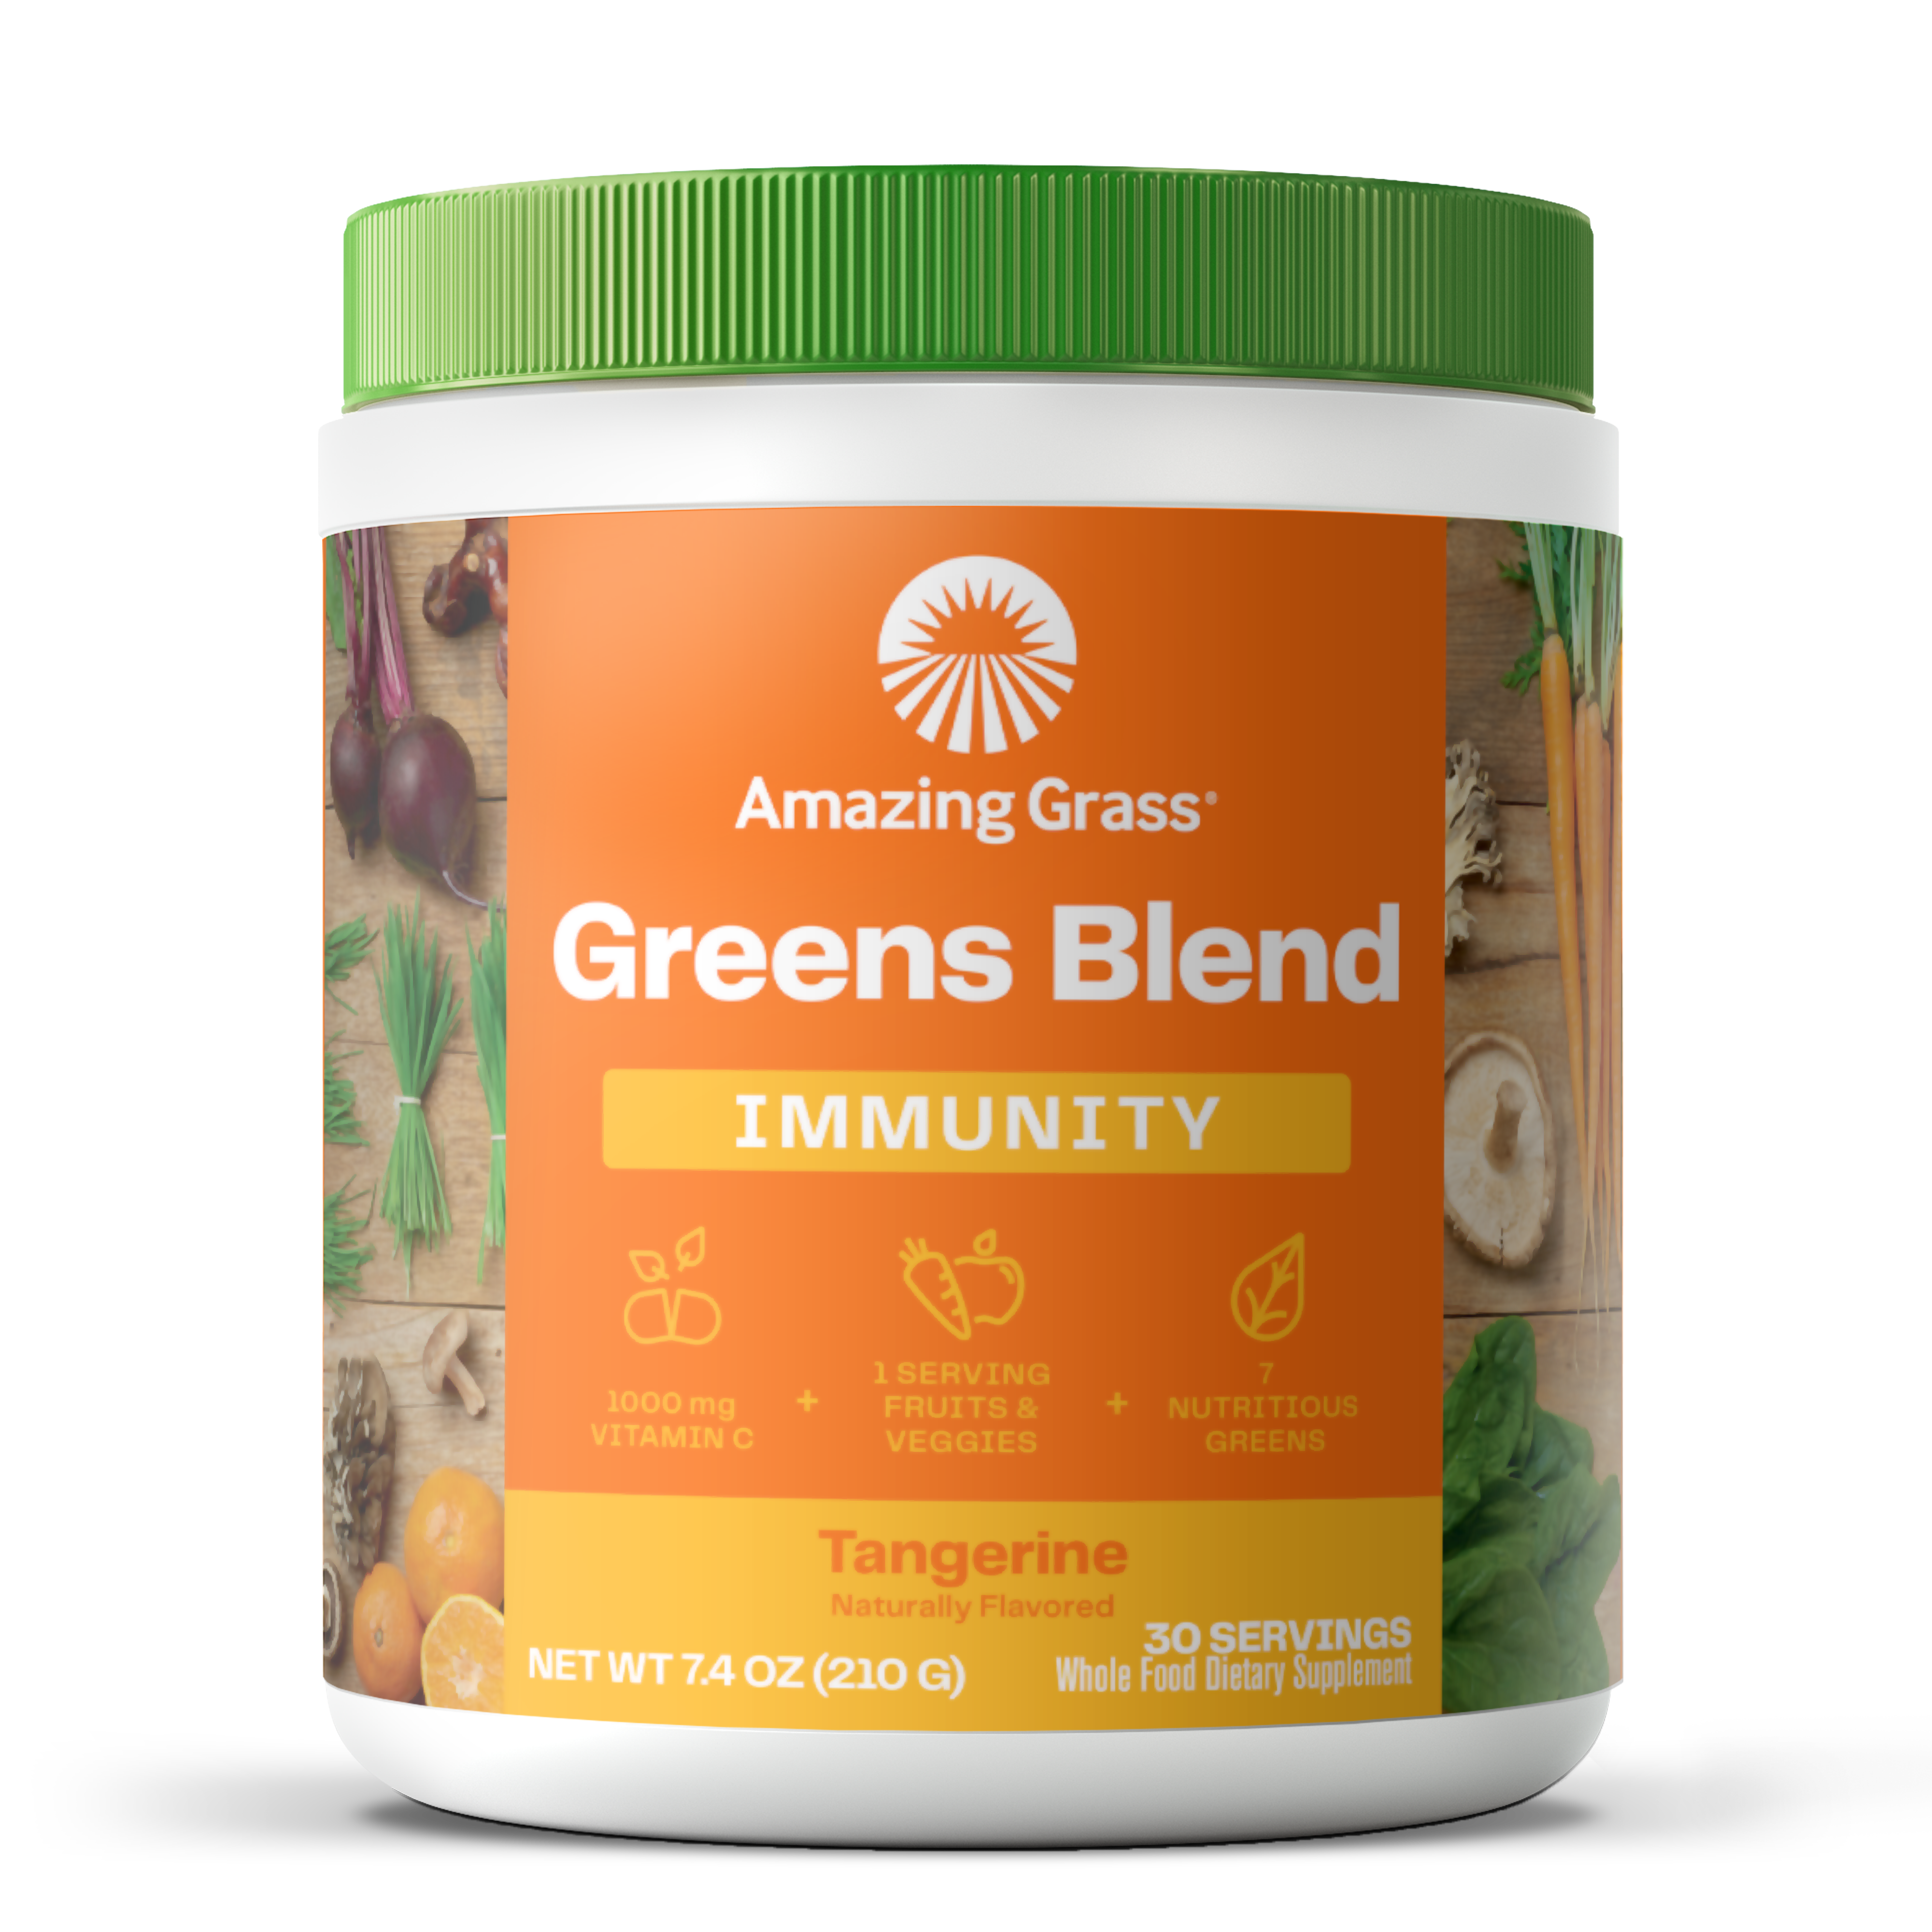 Amazing Grass Greens Blend Superfood: Super Greens Powder Smoothie Mix with Organic Spirulina, Chlorella, Beet Root Powder, Digestive Enzymes 